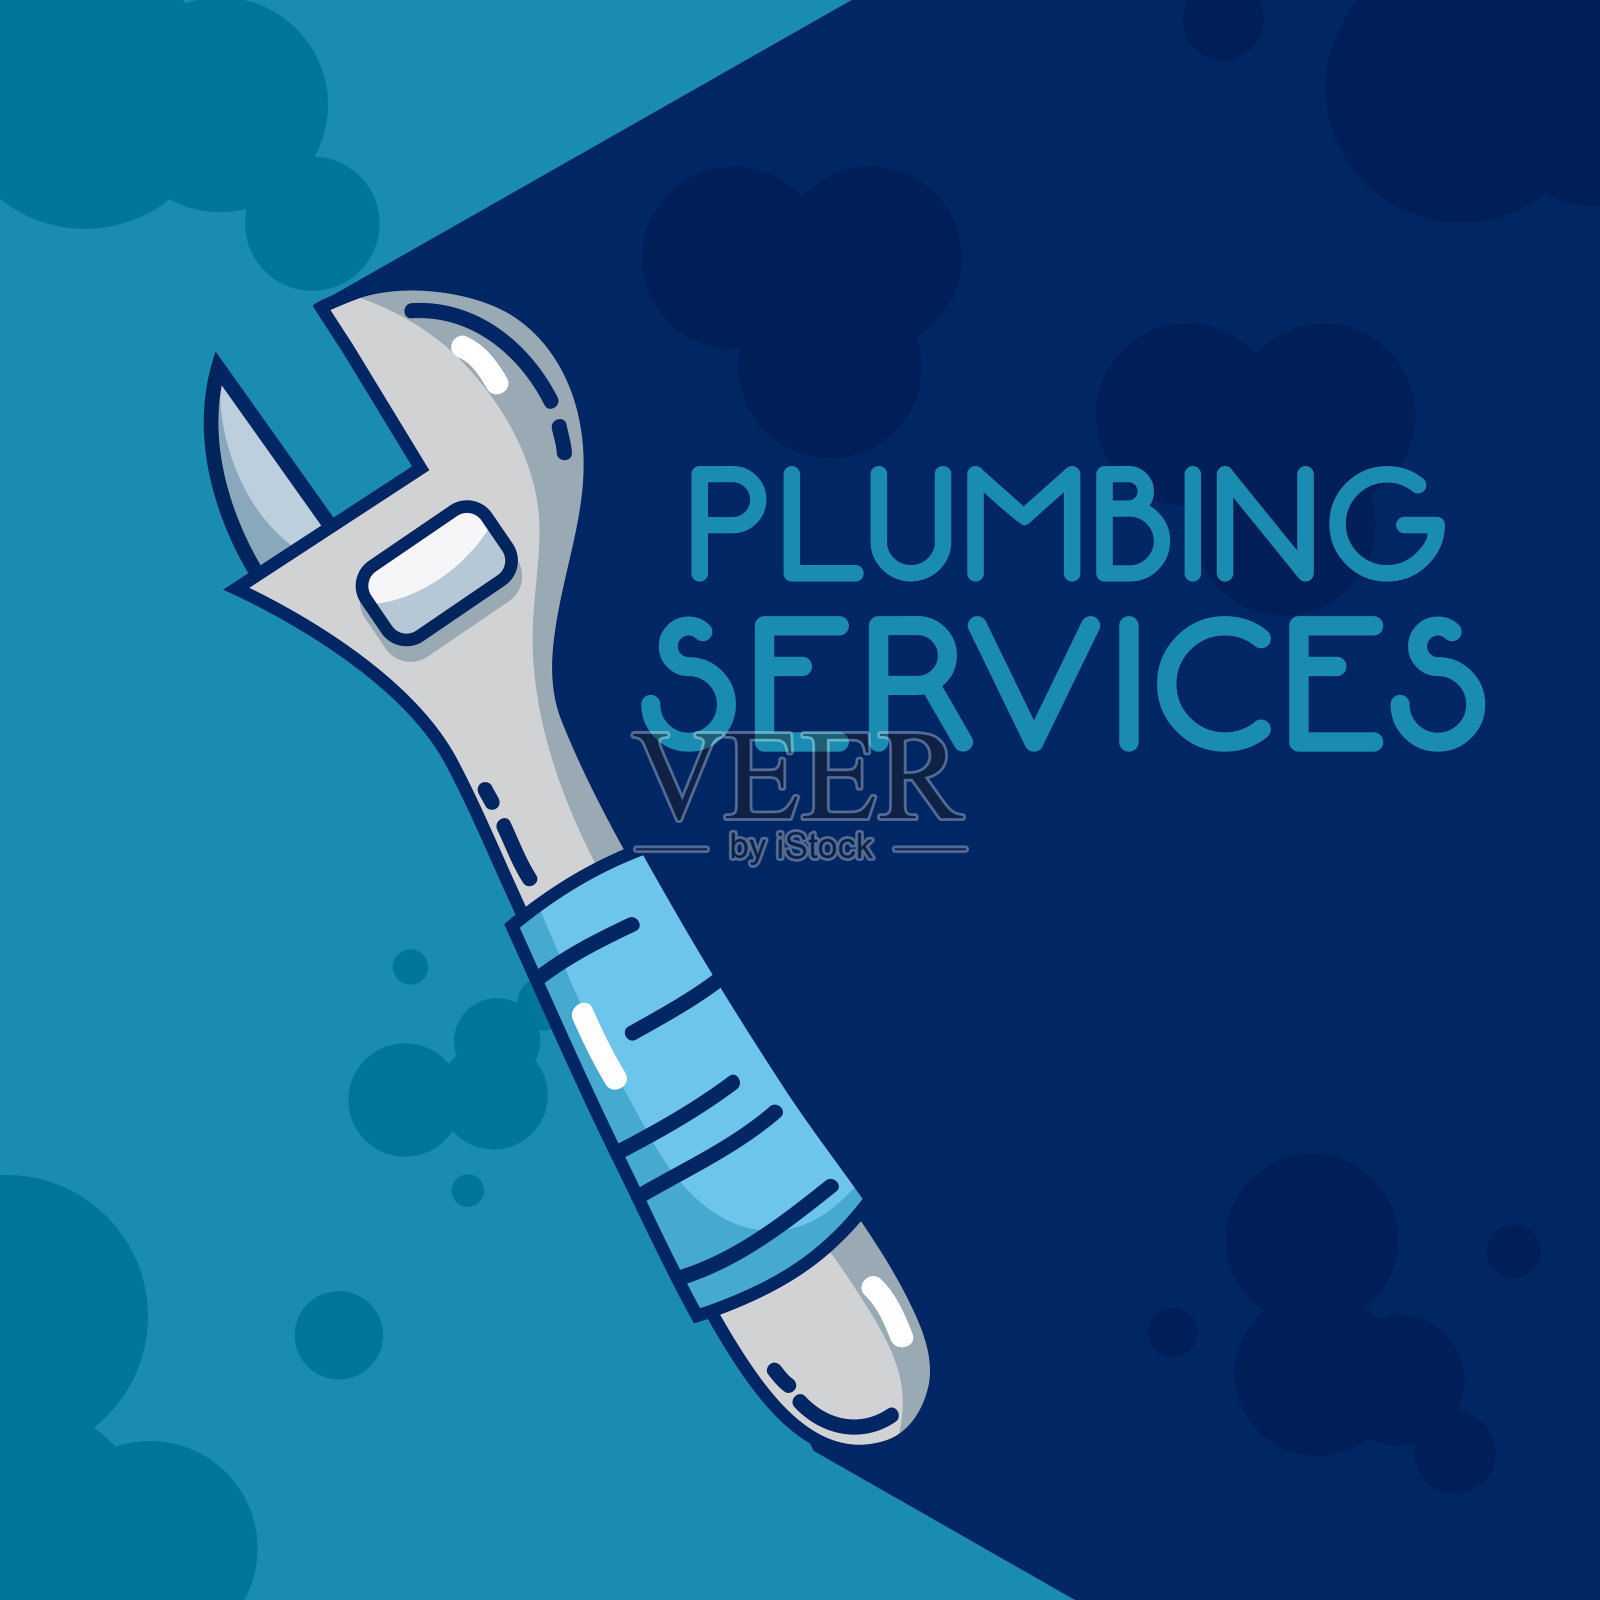 Plumbling服务理念插画图片素材